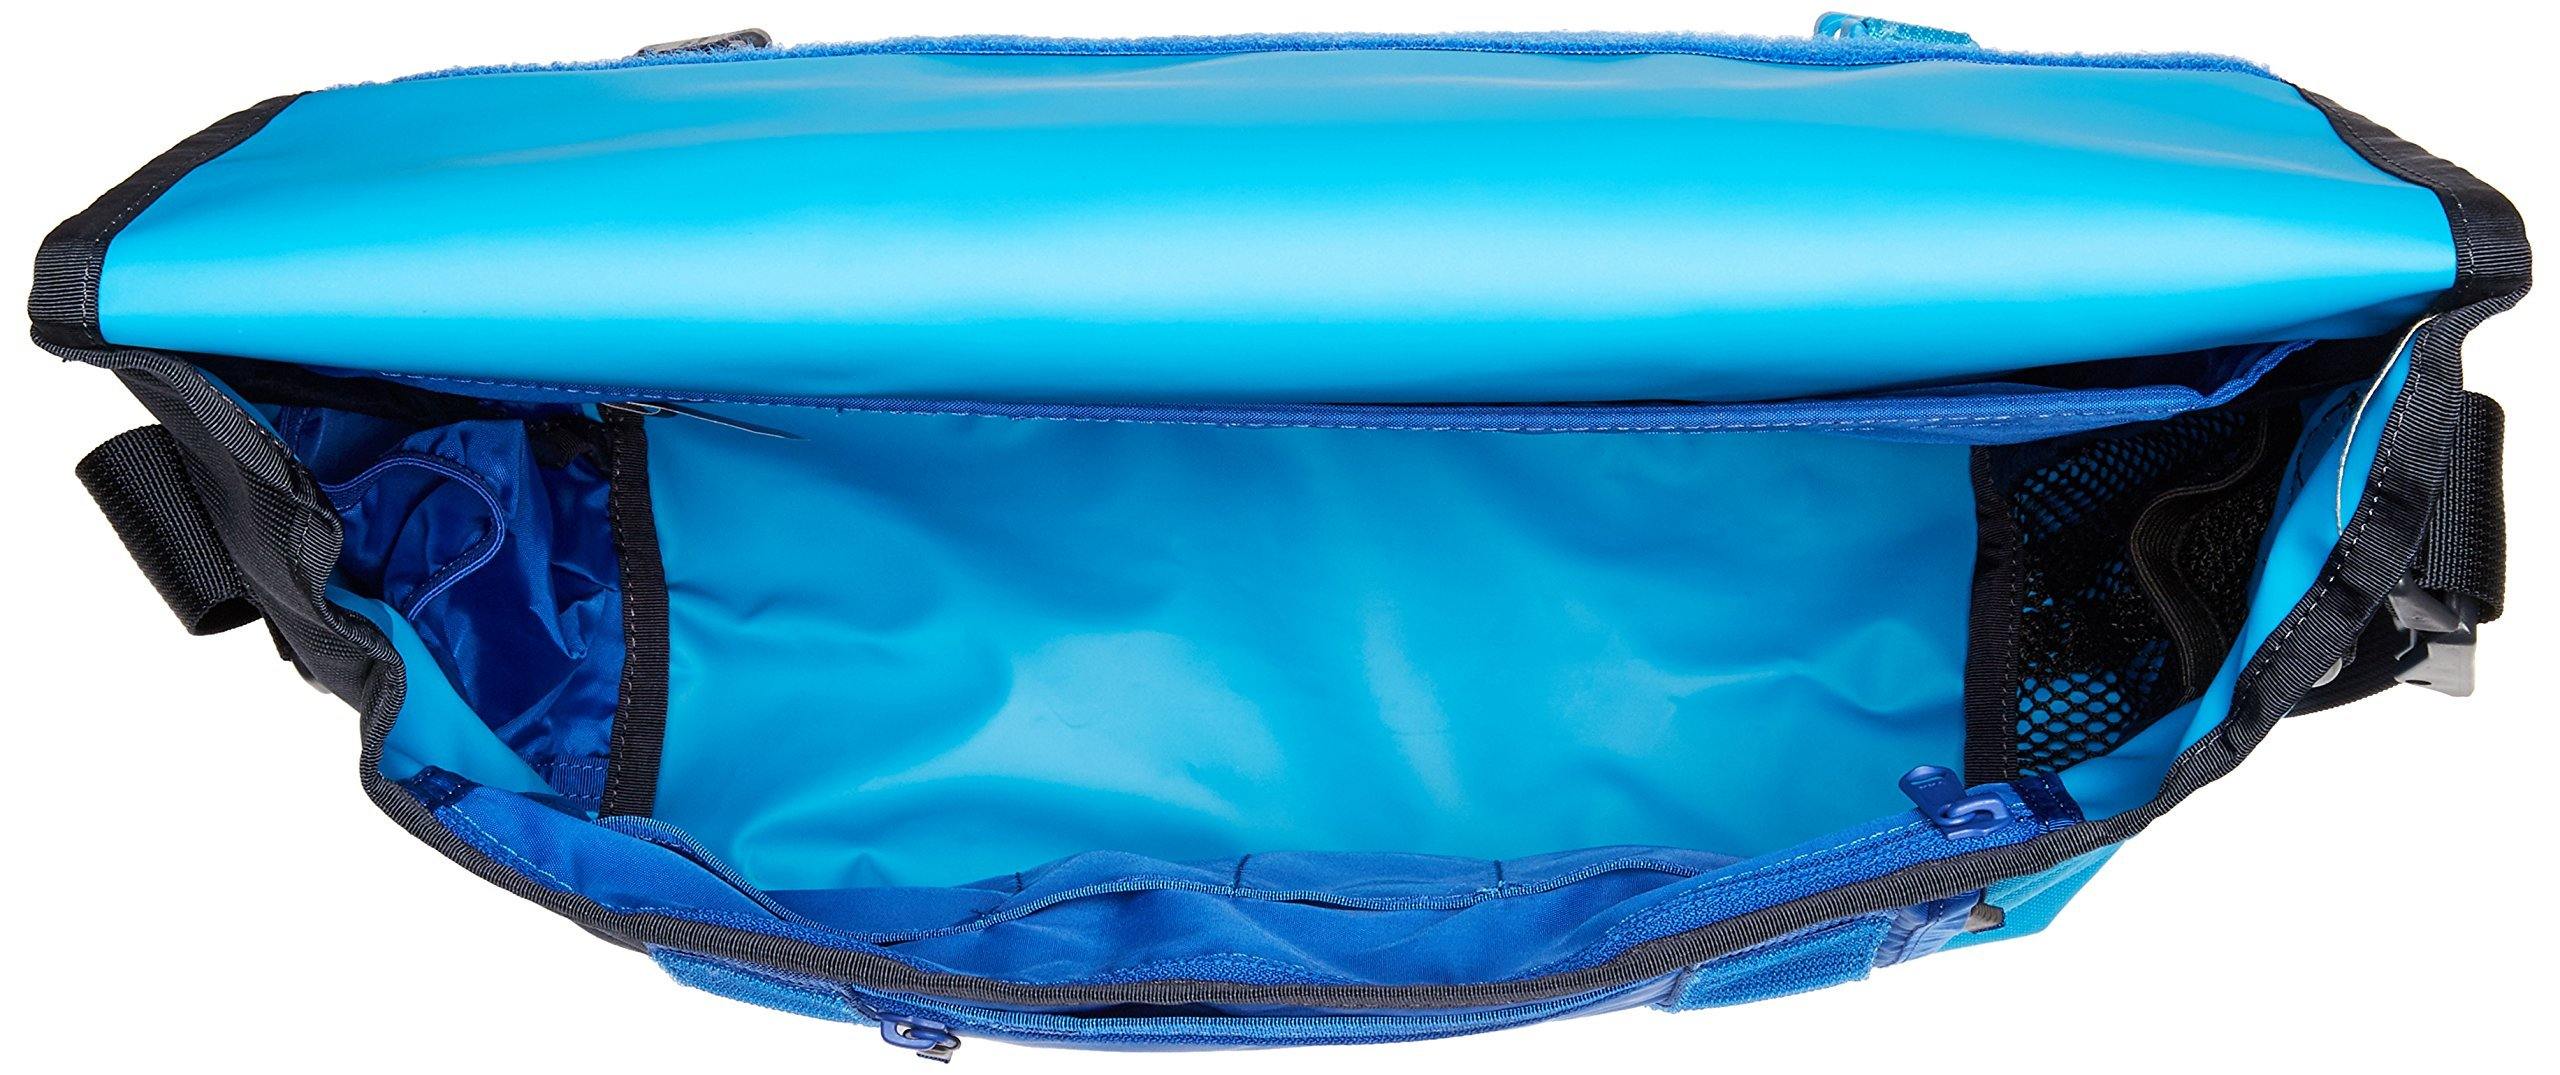 Timbuk2 Heritage Classic XS Messenger Bag, Blue